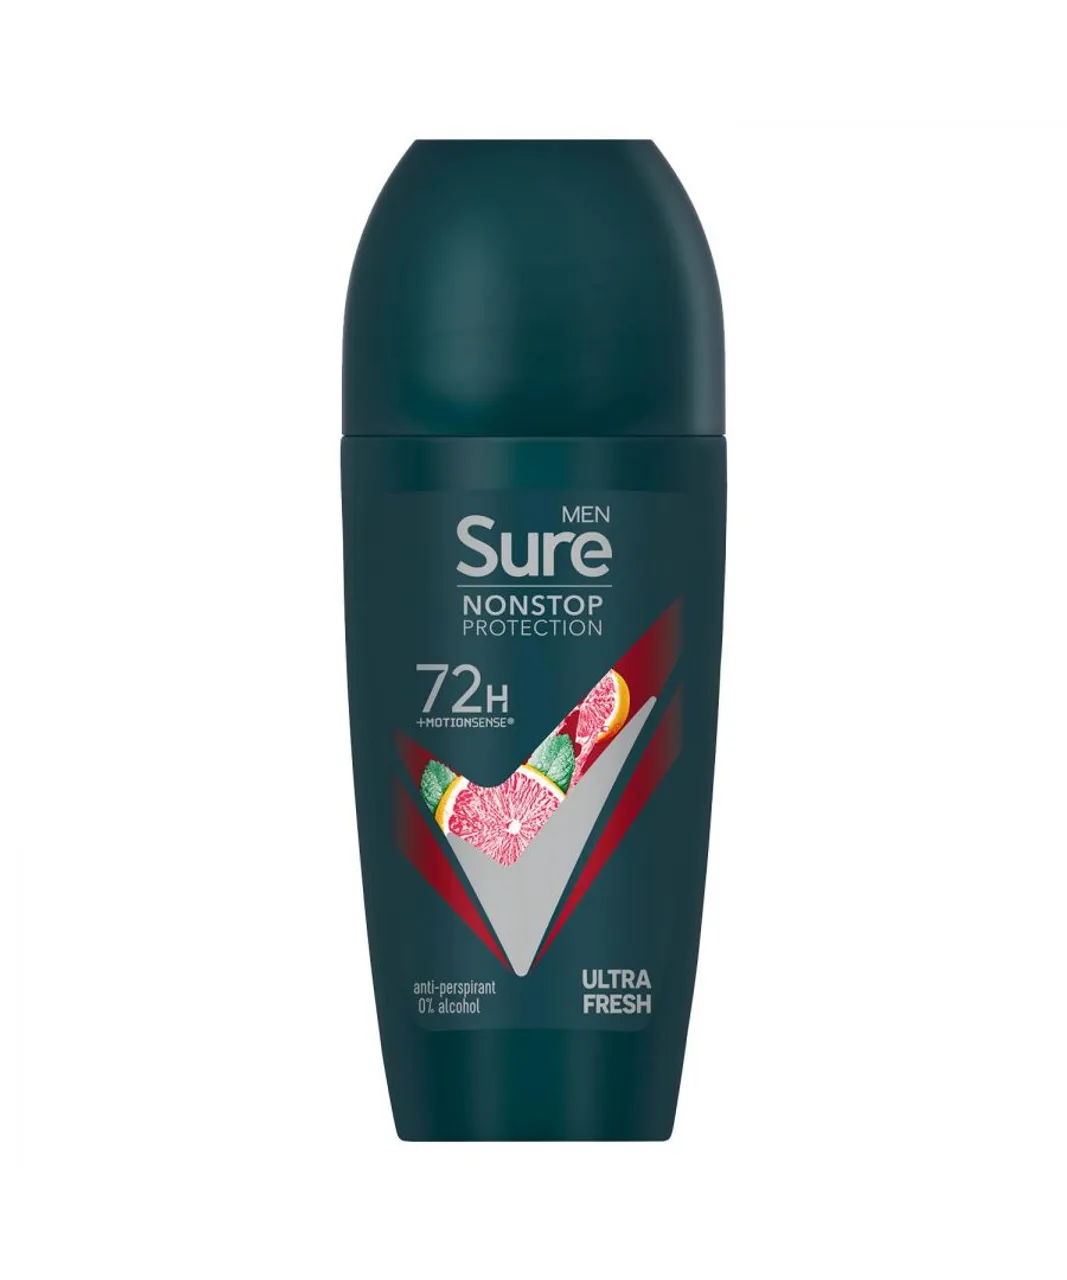 Sure Mens Men Antiperspirant Deodorant Roll On 72H Nonstop, Ultra Fresh, 50ml, 3 Pack - NA - One Size